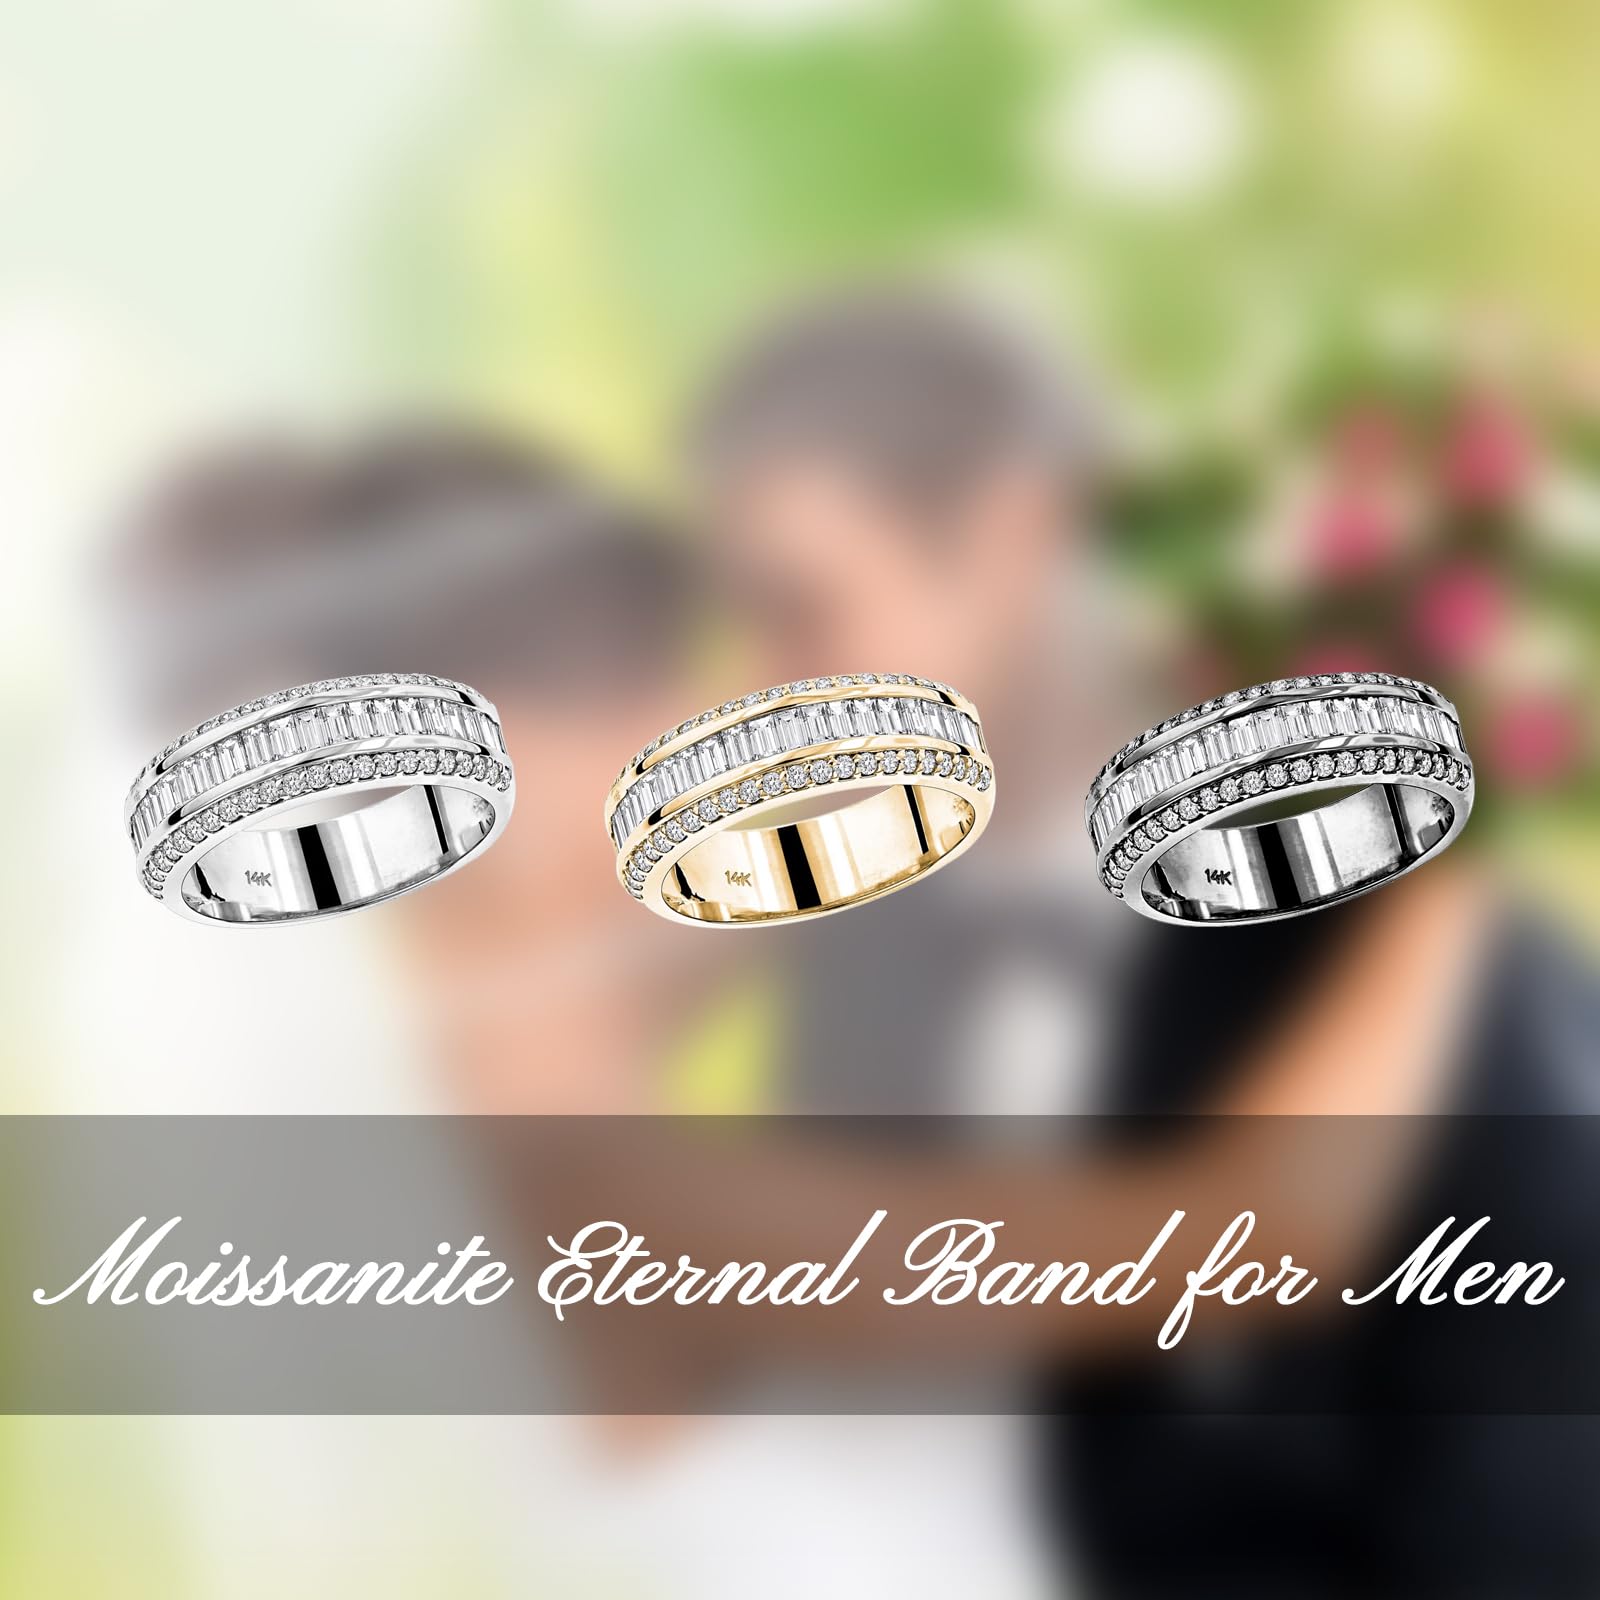 MRENITE 10K 14K 18K Gold Men's Moissanite Eternity Rings Wedding Band Size 5 to 15 Engrave Name Birthday Anniversary Luxury Jewelry Gifts for Him